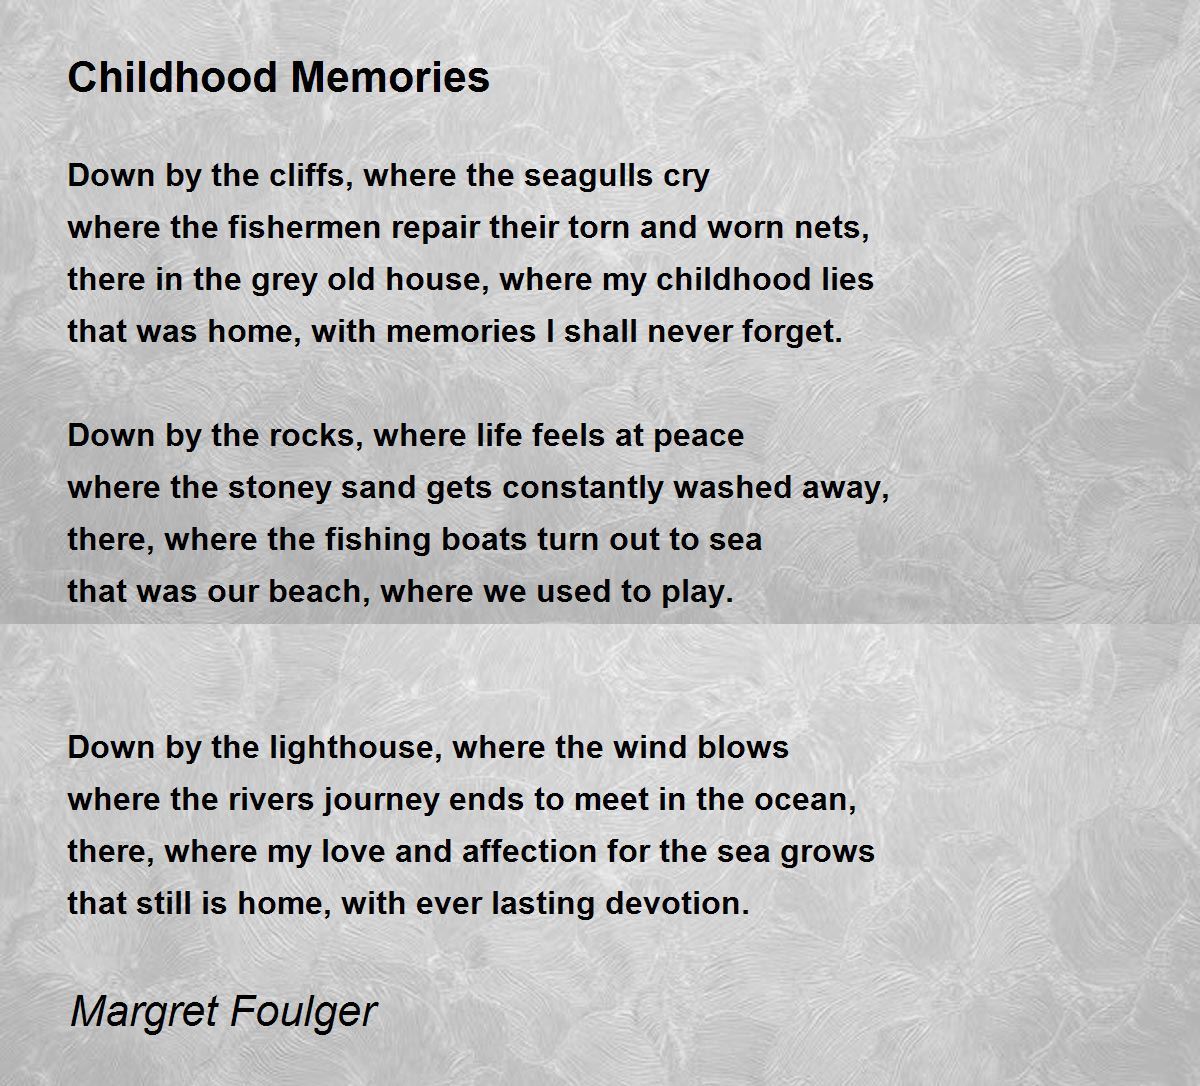 Childhood Memories - Childhood Memories Poem by Margret Foulger